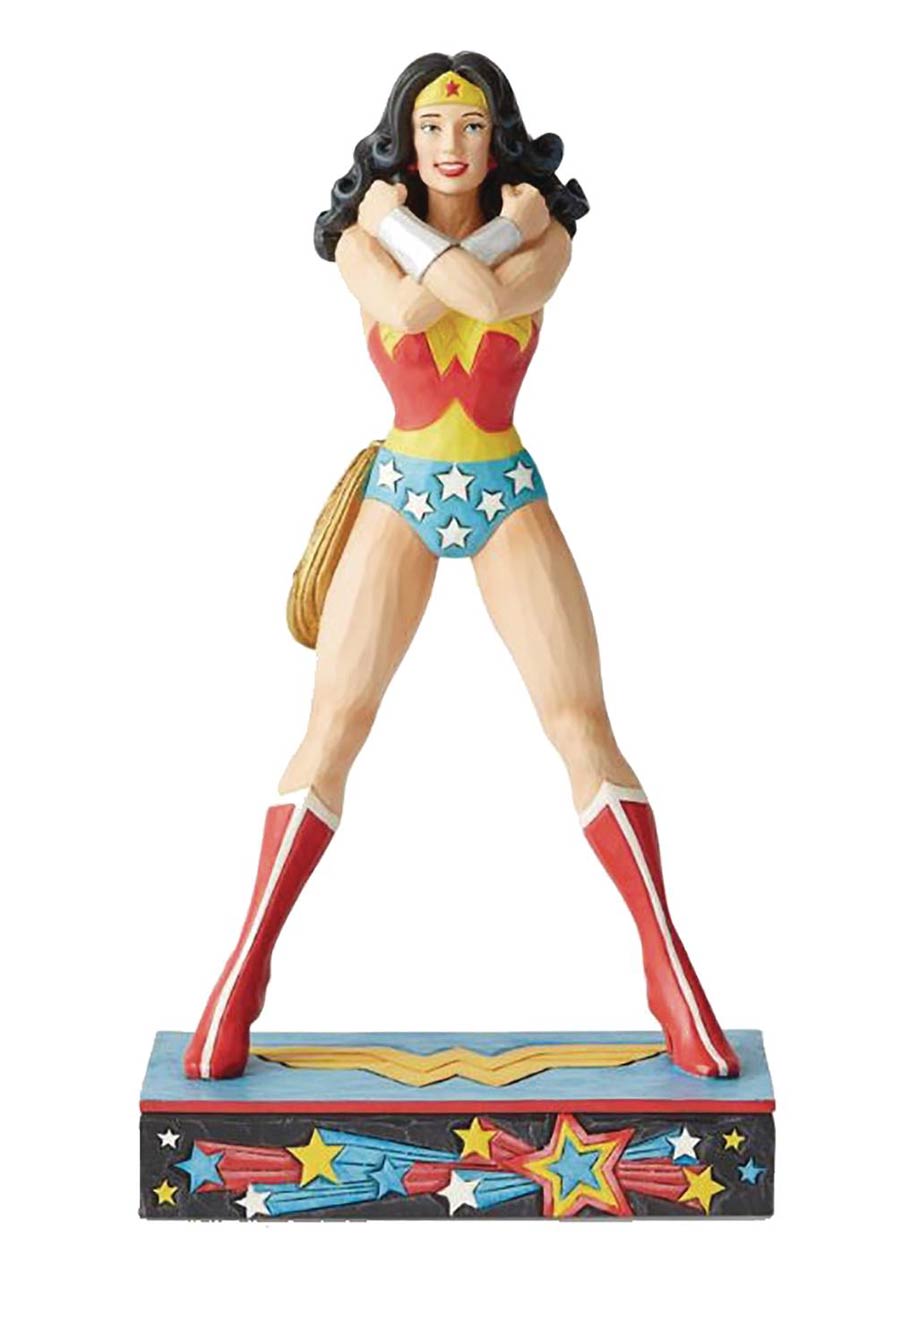 DC Comics Heroes By Jim Shore Silver Age Figurine - Wonder Woman